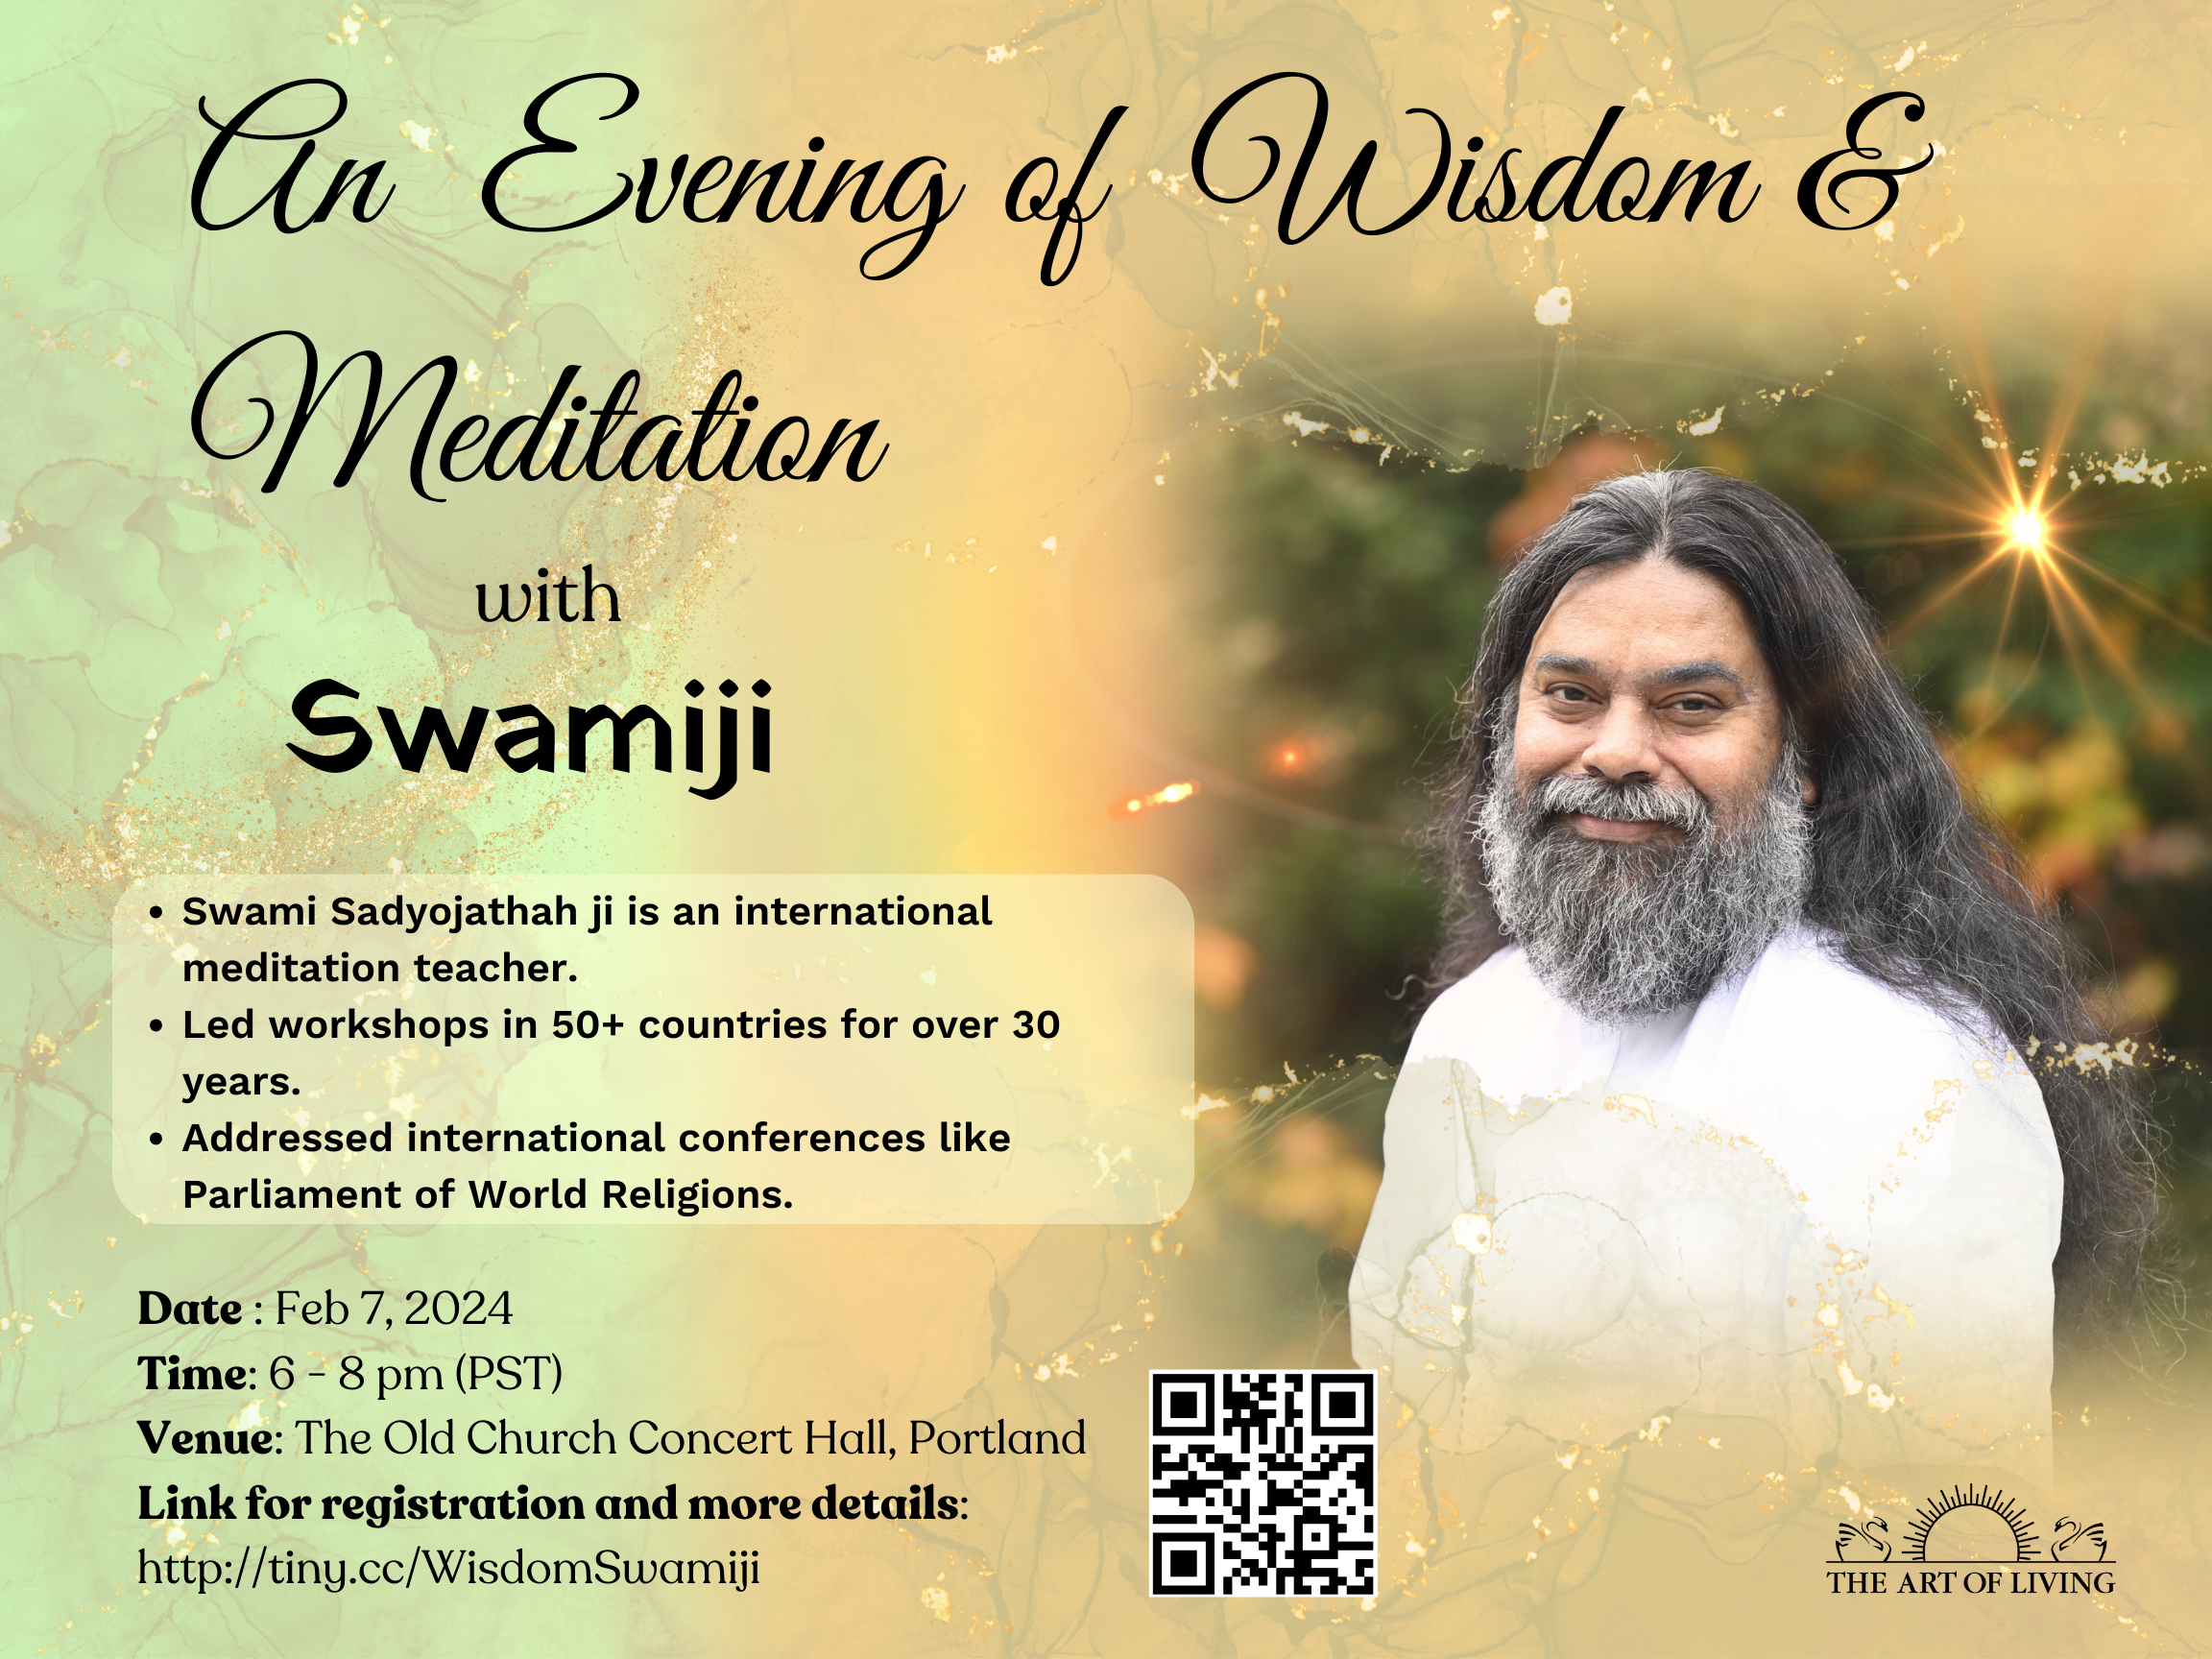 An Evening of Wisdom and Meditation with Swami Sadyojathah